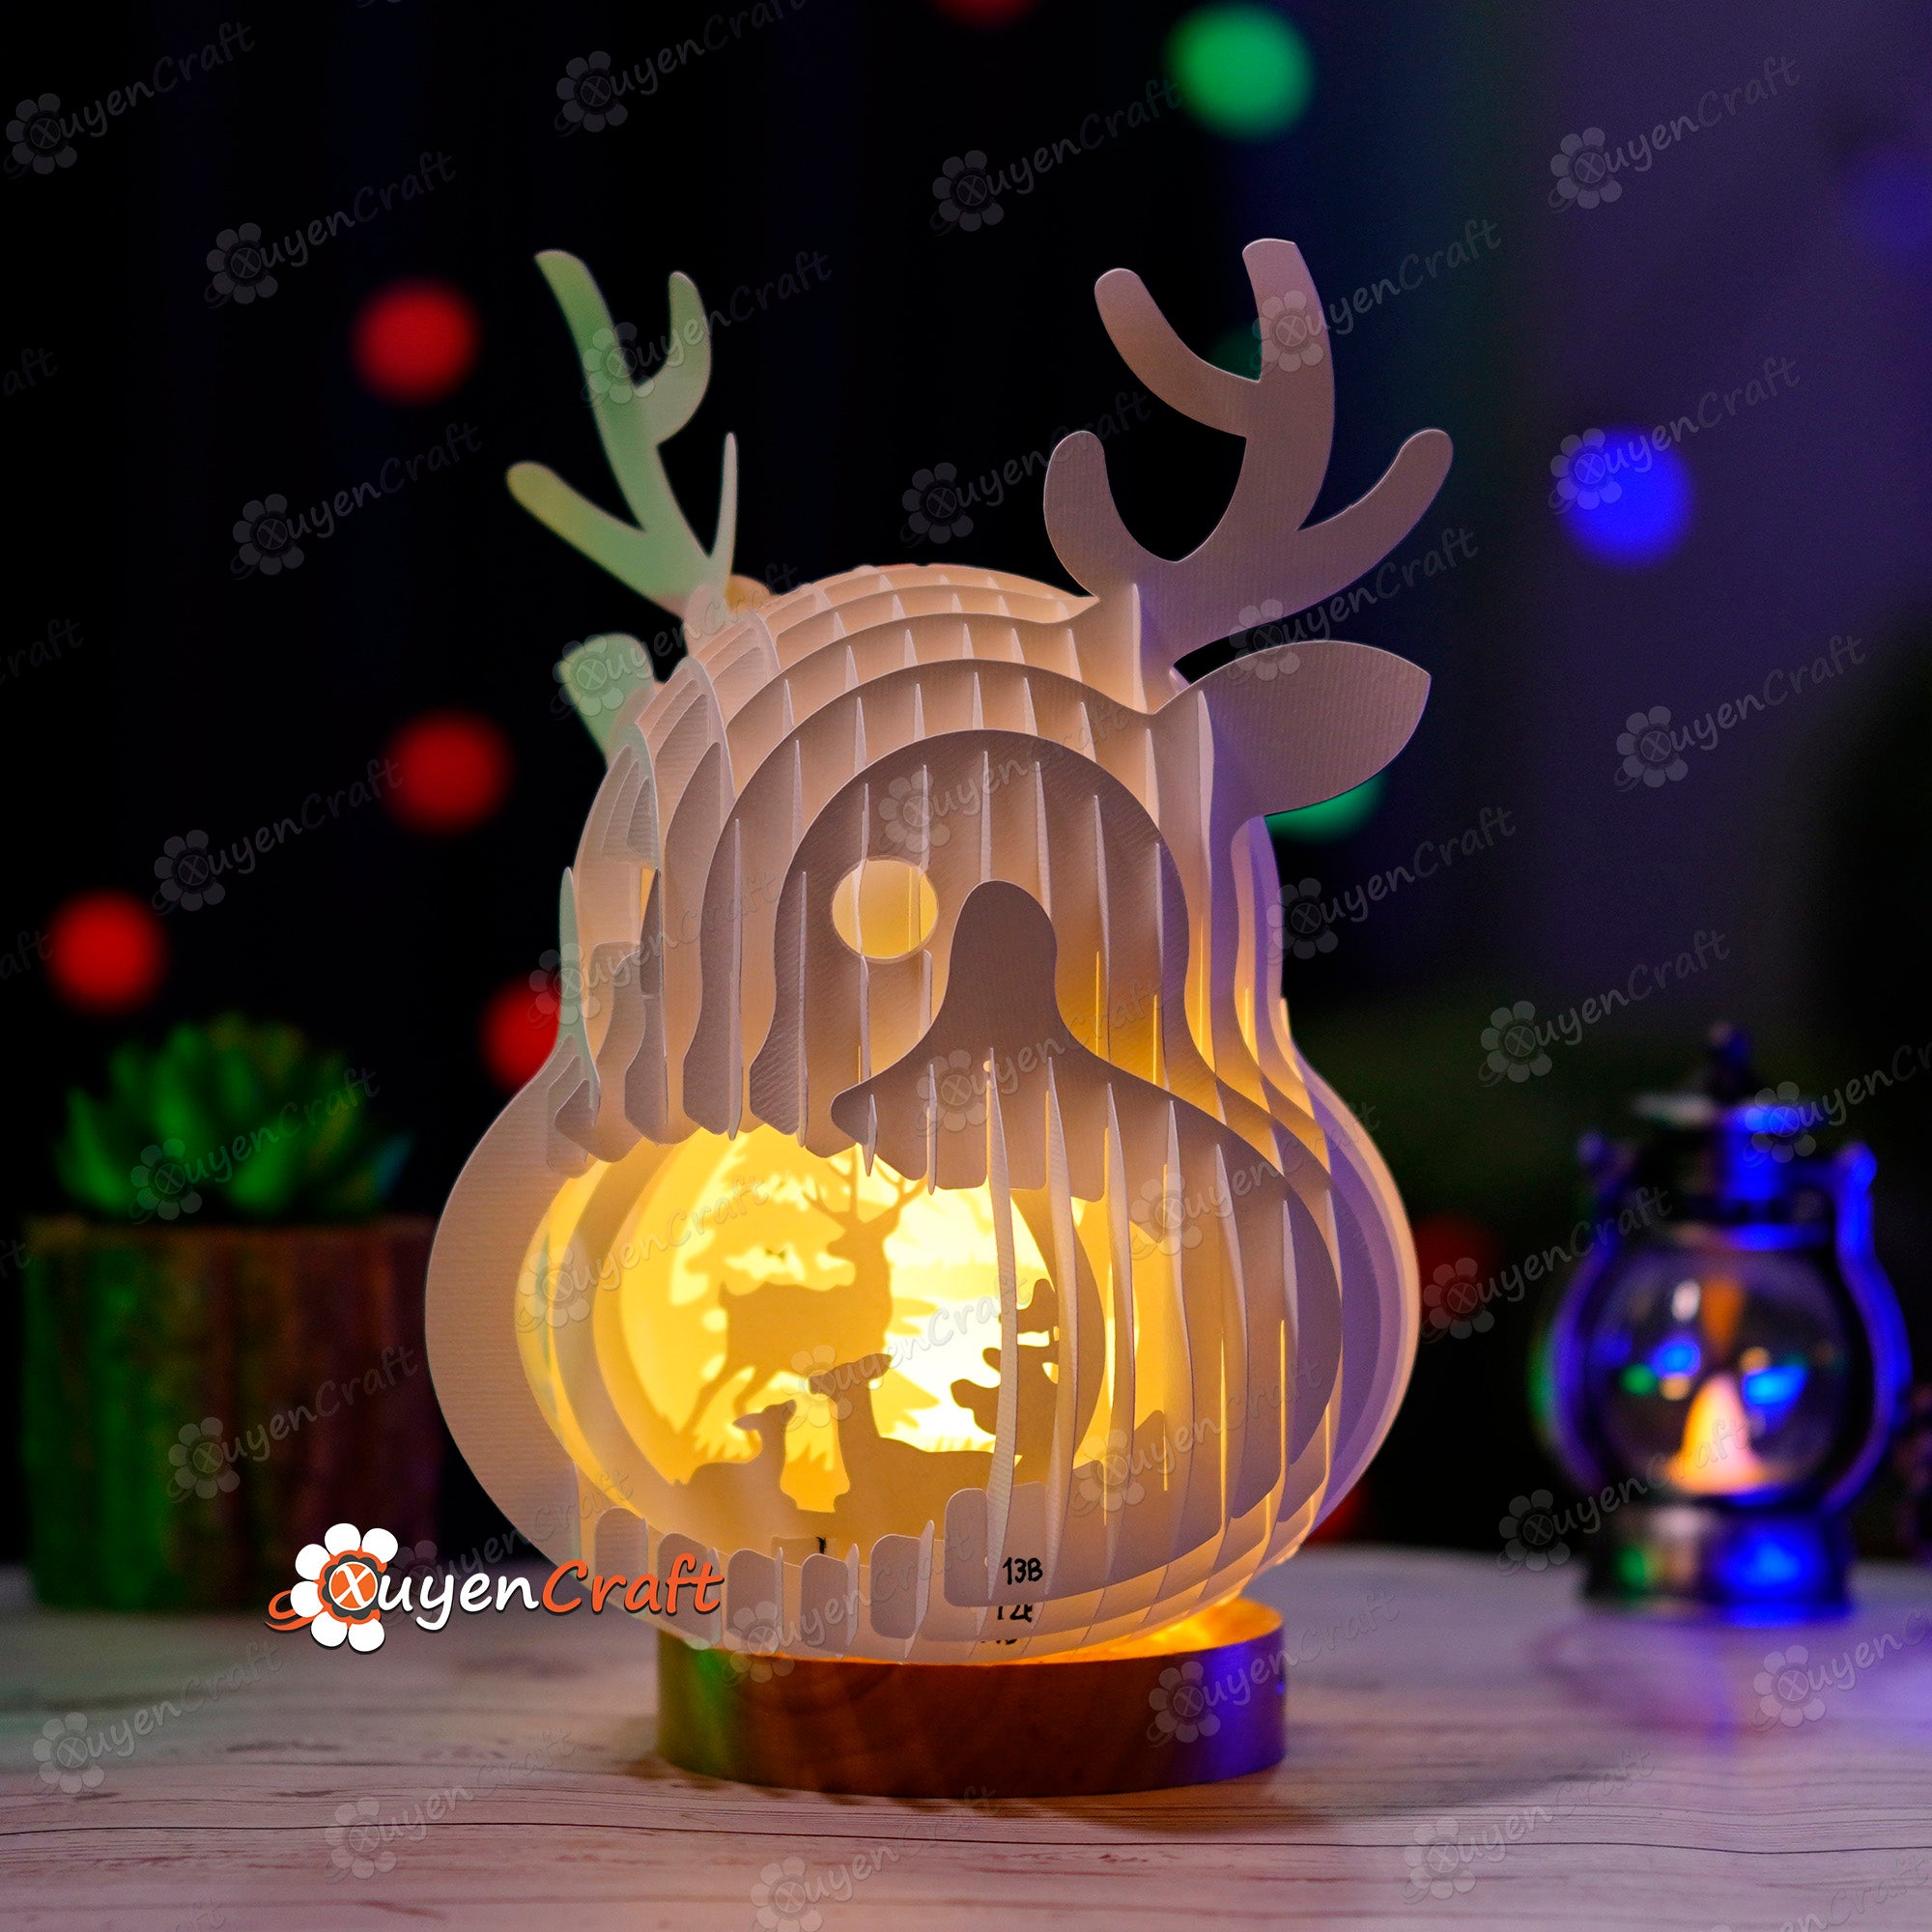 Deer Scene Reindeer Pop Up SVG Template for Cricut Projects - 3D Reindeer Slice Form Popup for Merry Christmas